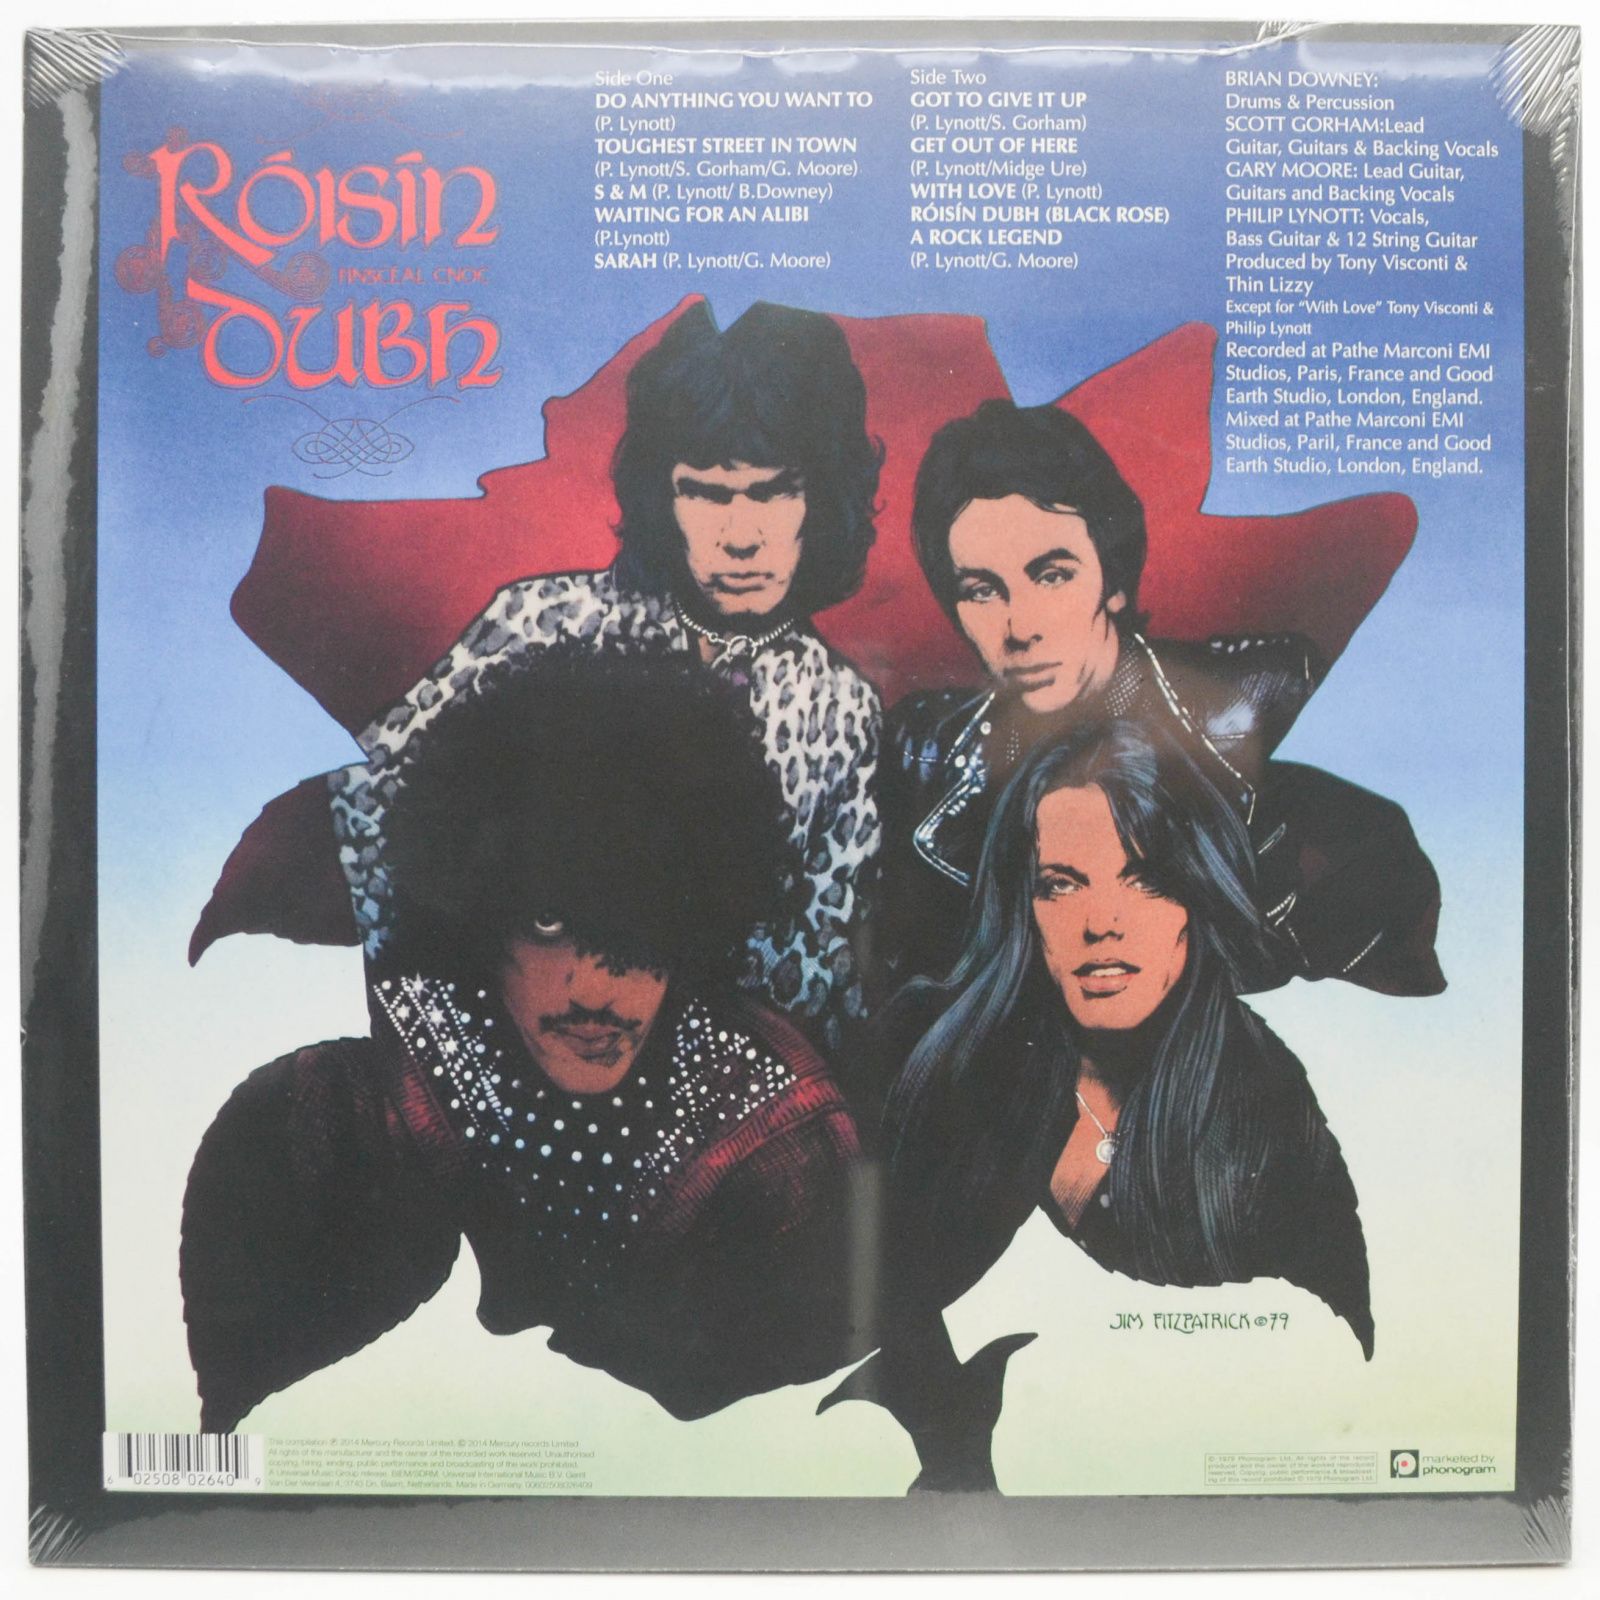 Thin Lizzy — Black Rose, 1979